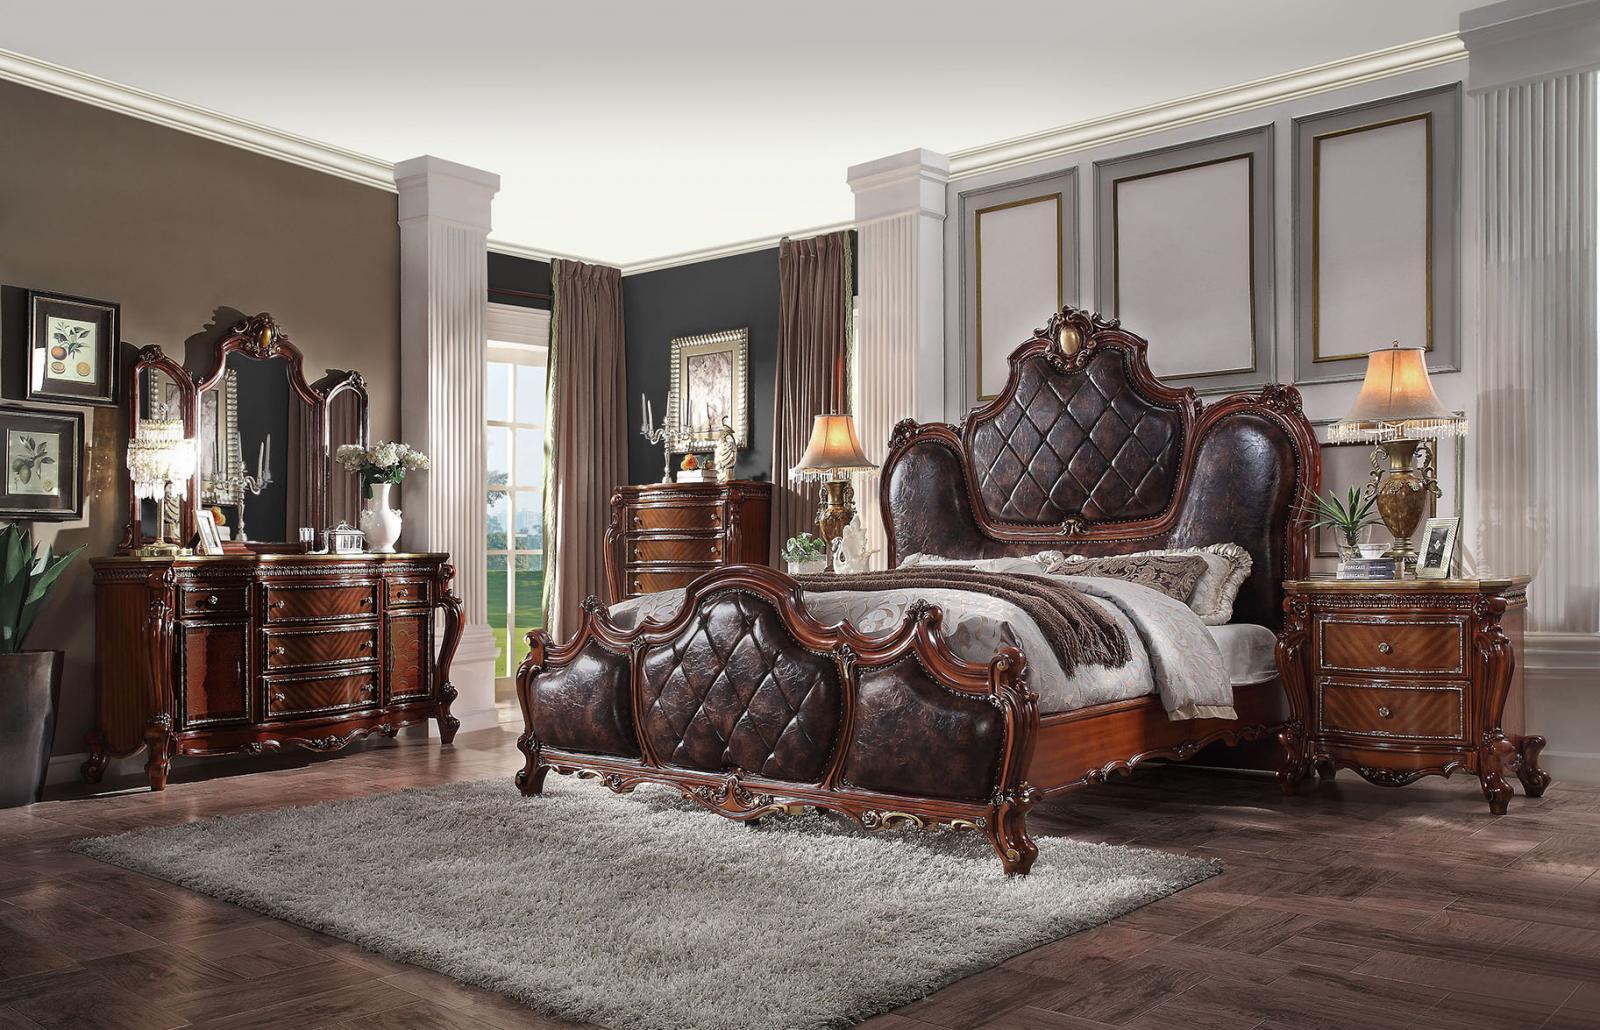 

    
Dili Upholstered Standard Bedroom Set 5Pcs KING Cherry Oak Classic Vintage
